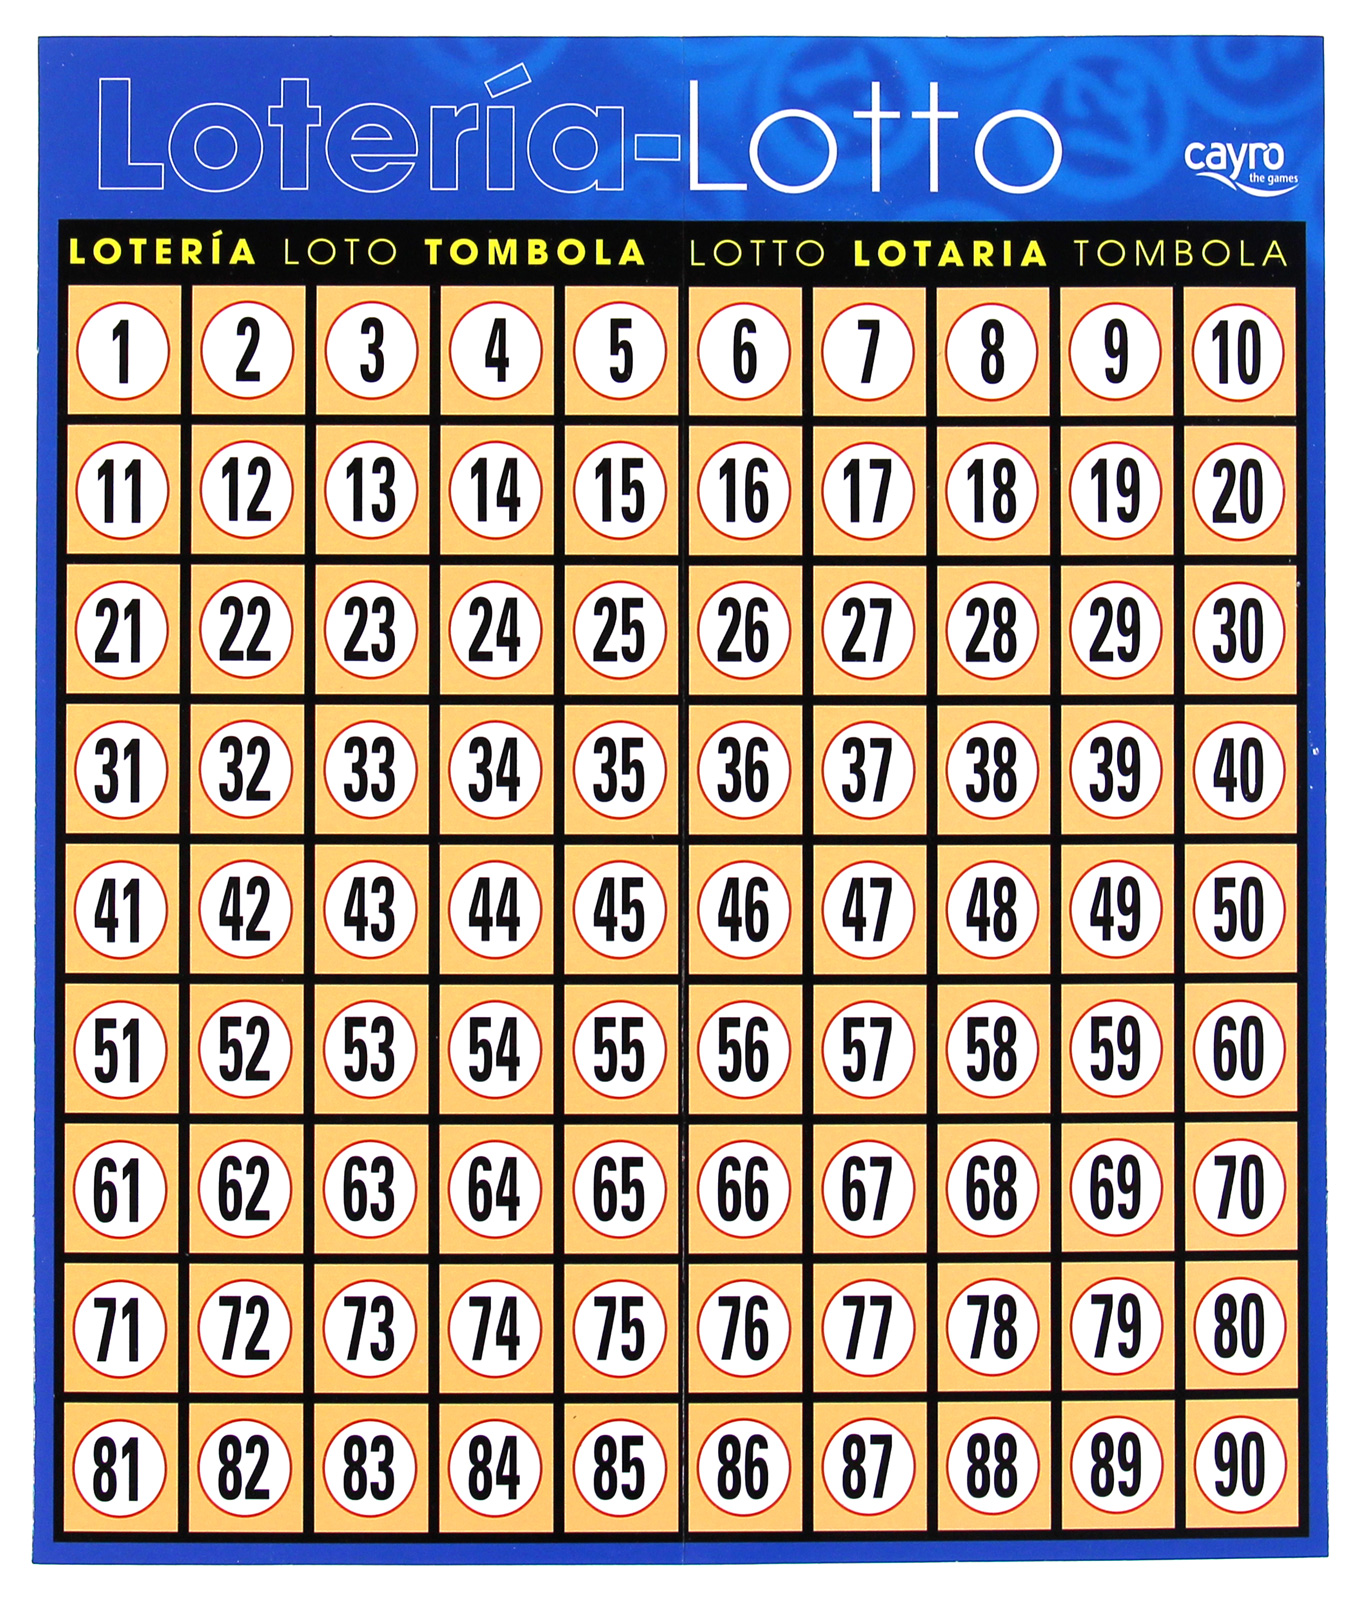 Loteria grandes millions New - 38120